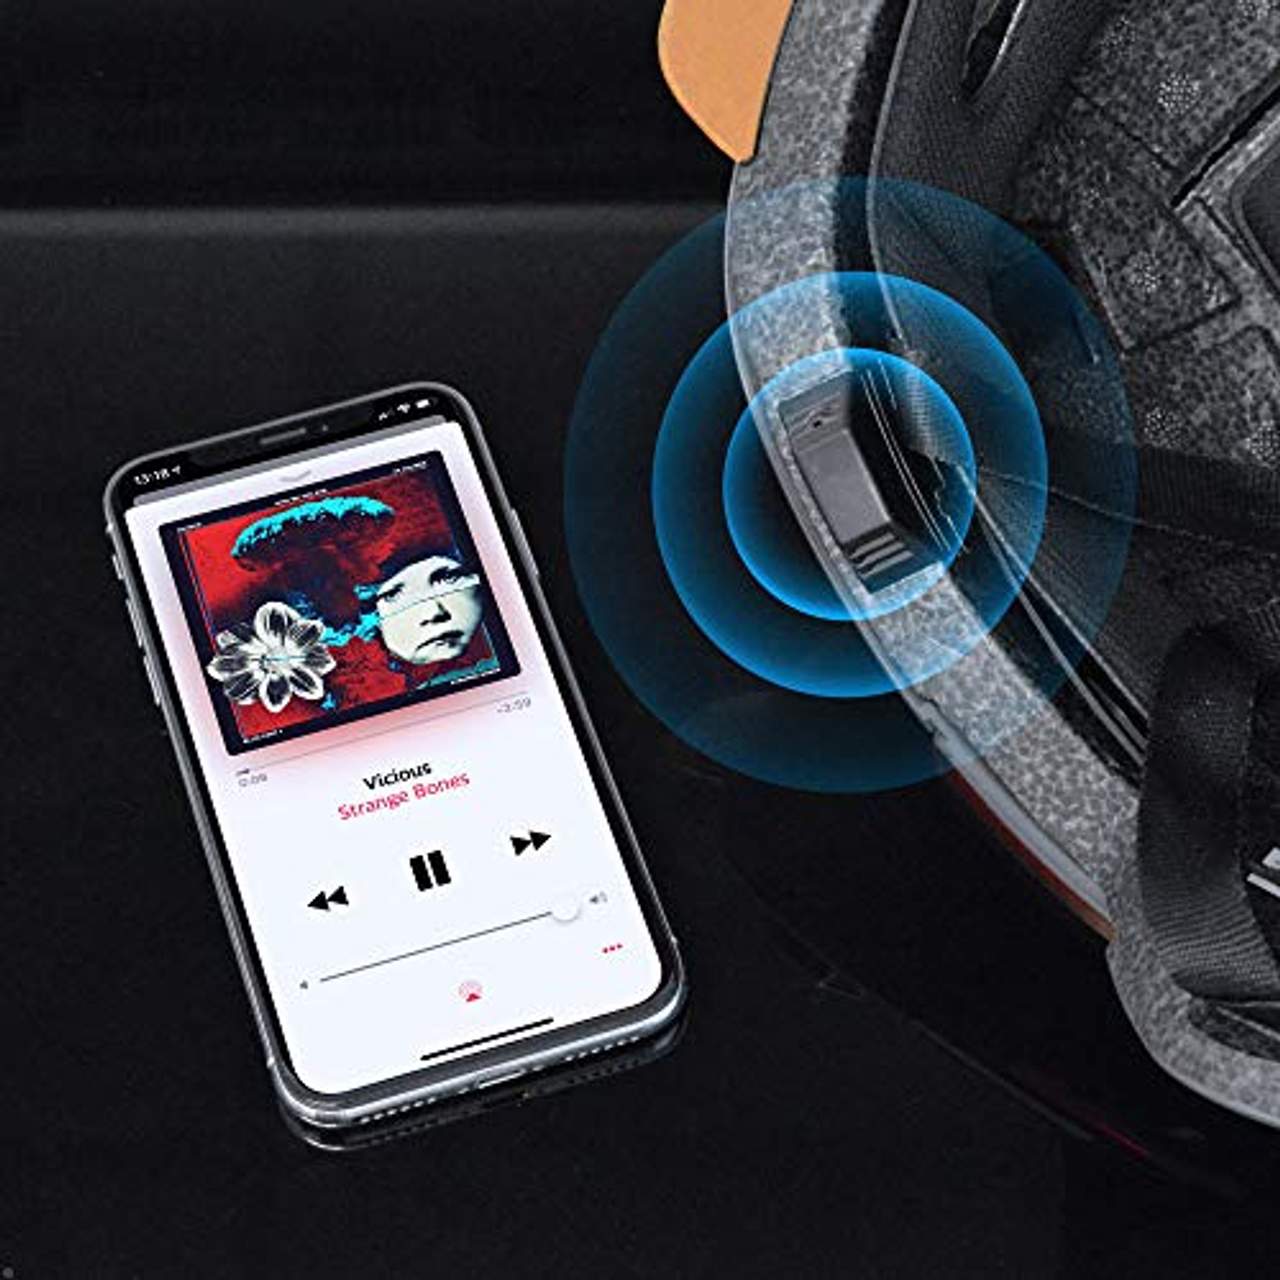 Livall Unisex BH51M Musik, Rücklicht mit Tag/Nacht Automatik, Blinker, Navigation, Anruffunktion